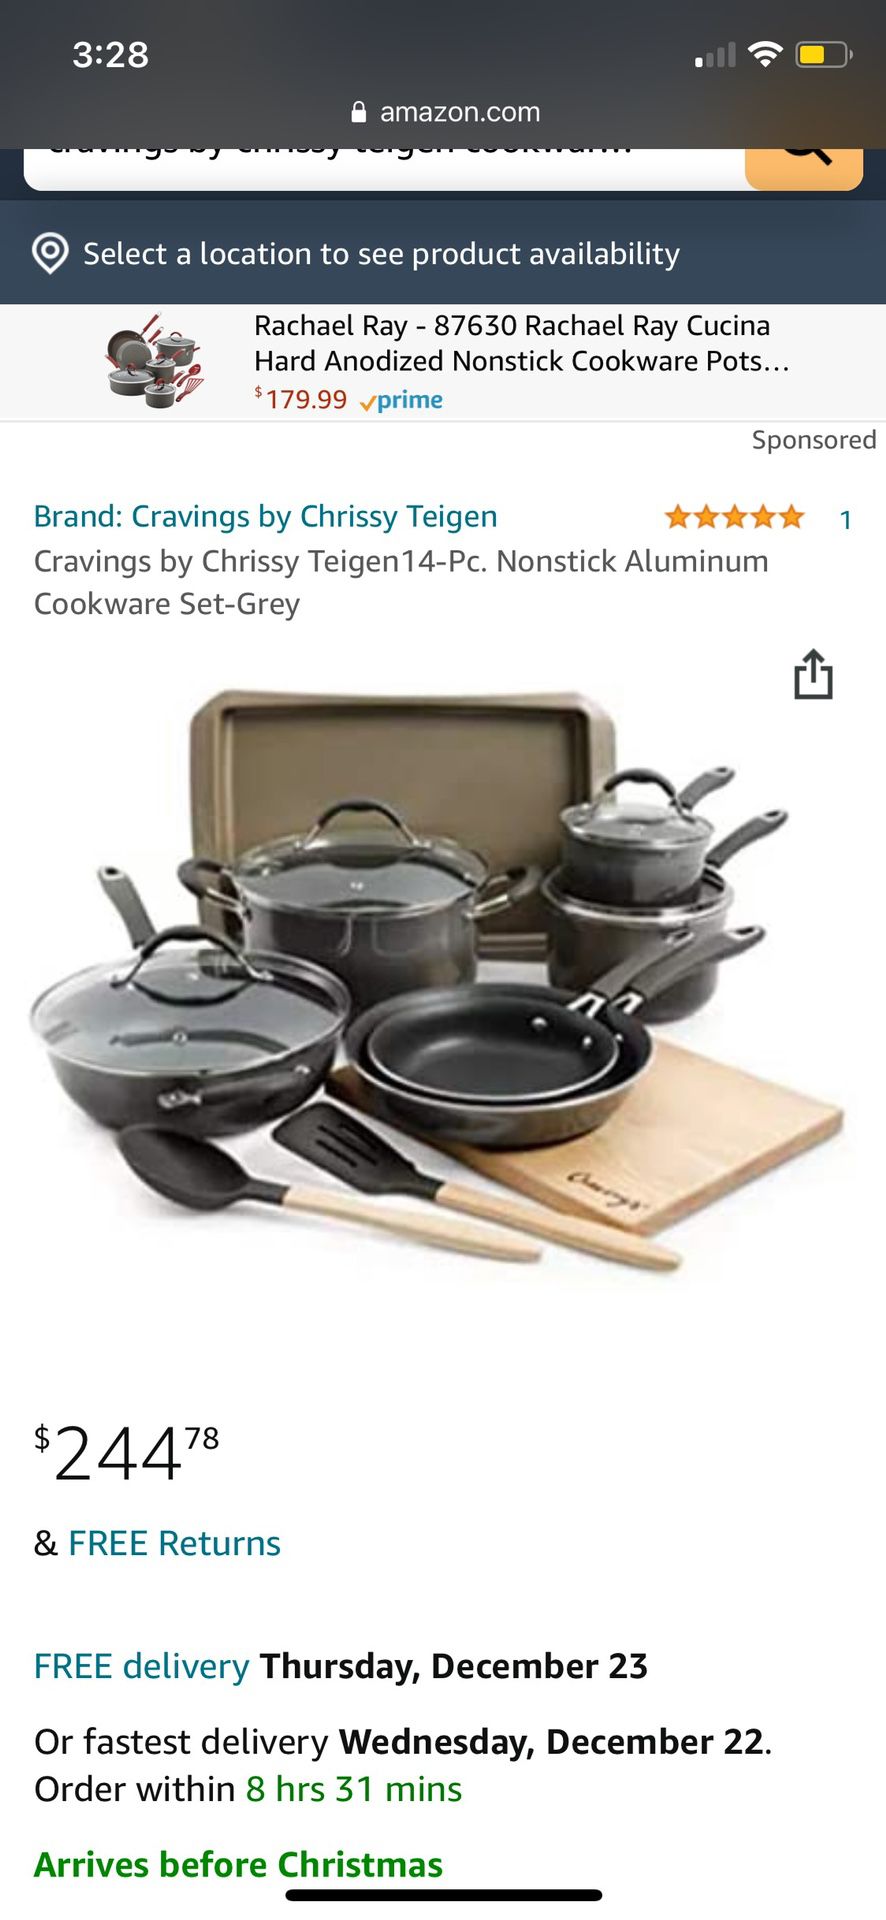 Cravings by Chrissy Teigen 14-Pc. Nonstick Aluminum Cookware Set